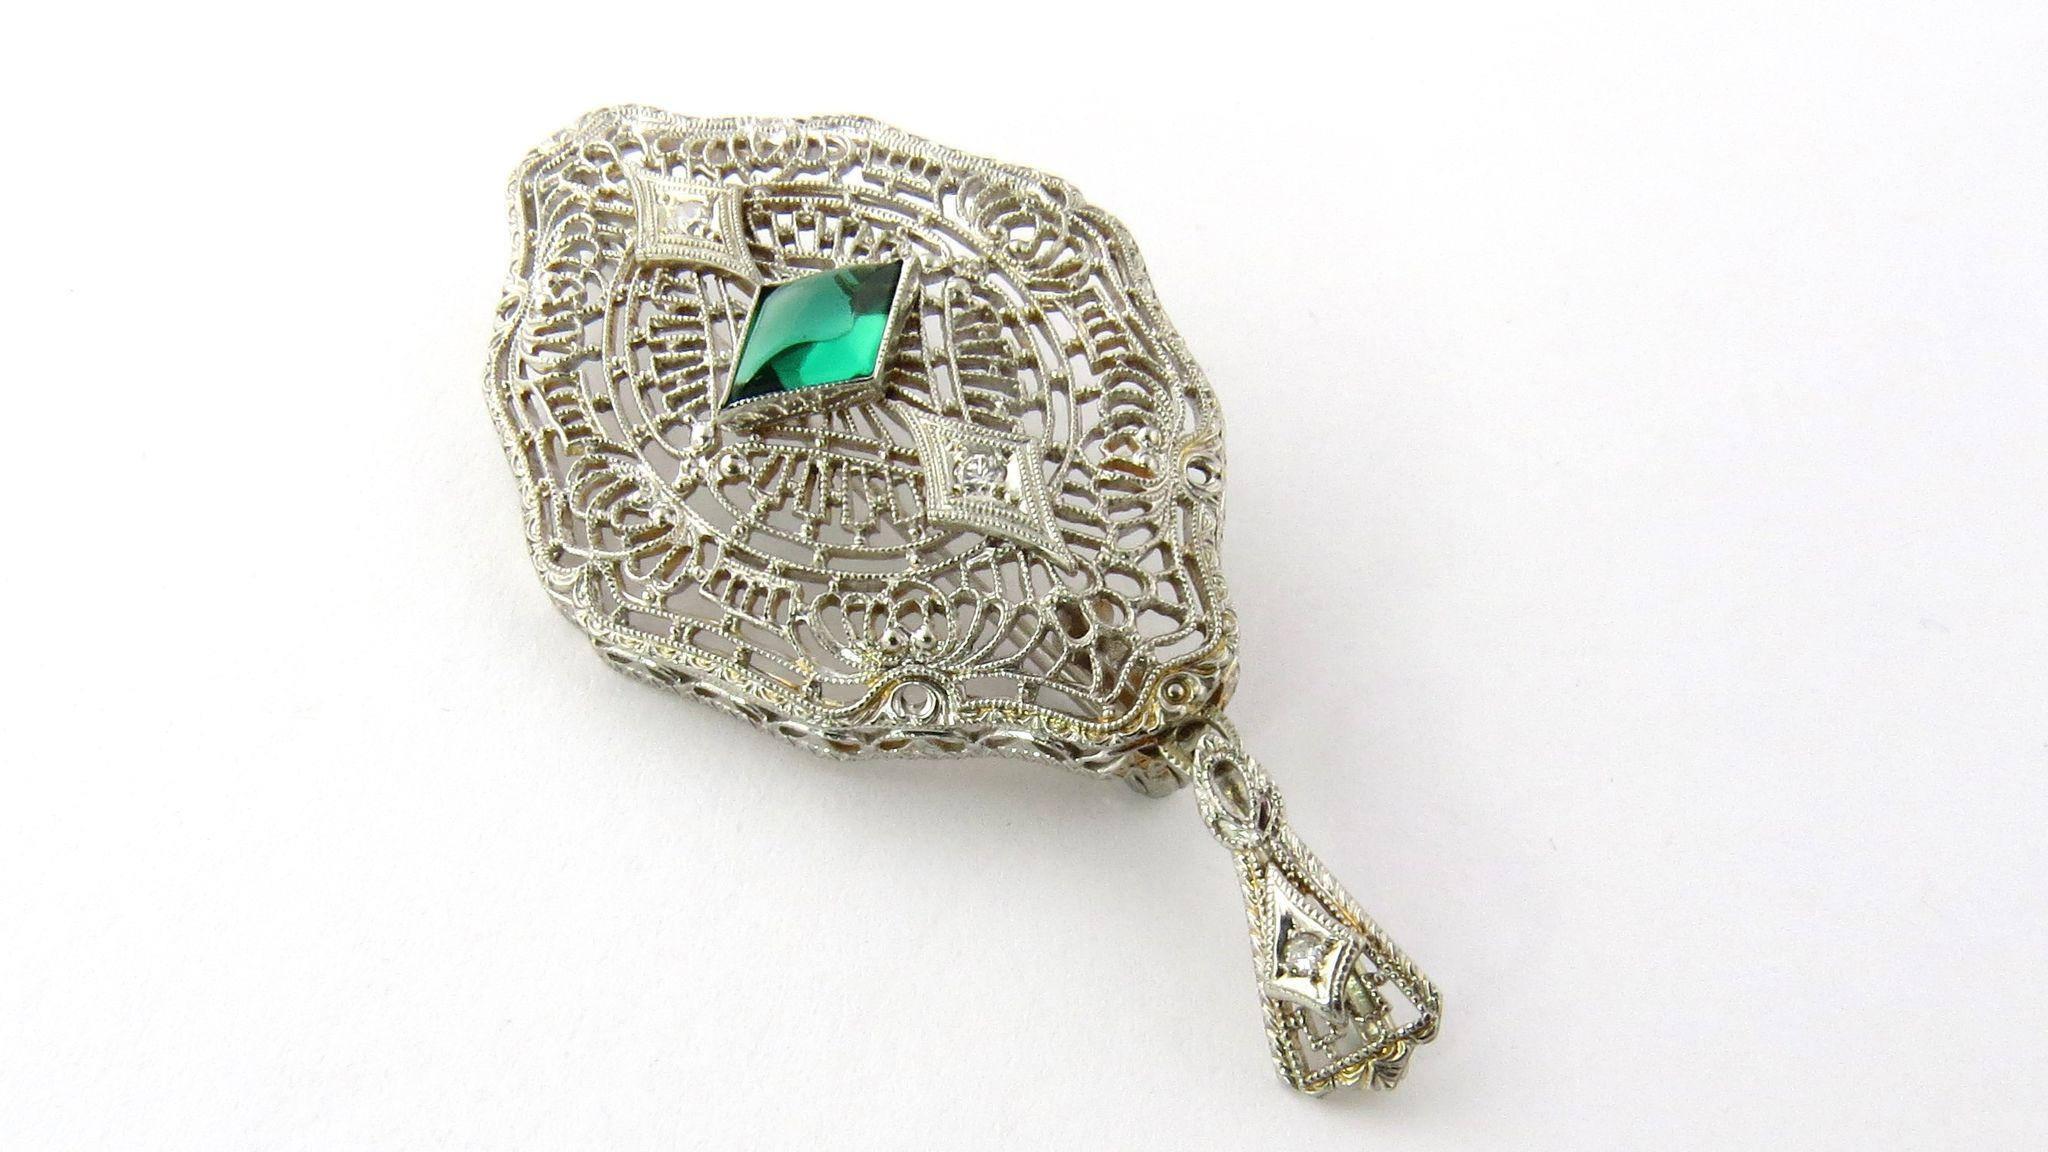 Vintage 14K White Gold Cabochon Emerald Green Glass Stone and Diamond Filigree Pendant / Brooch 

Pendant hangs 2